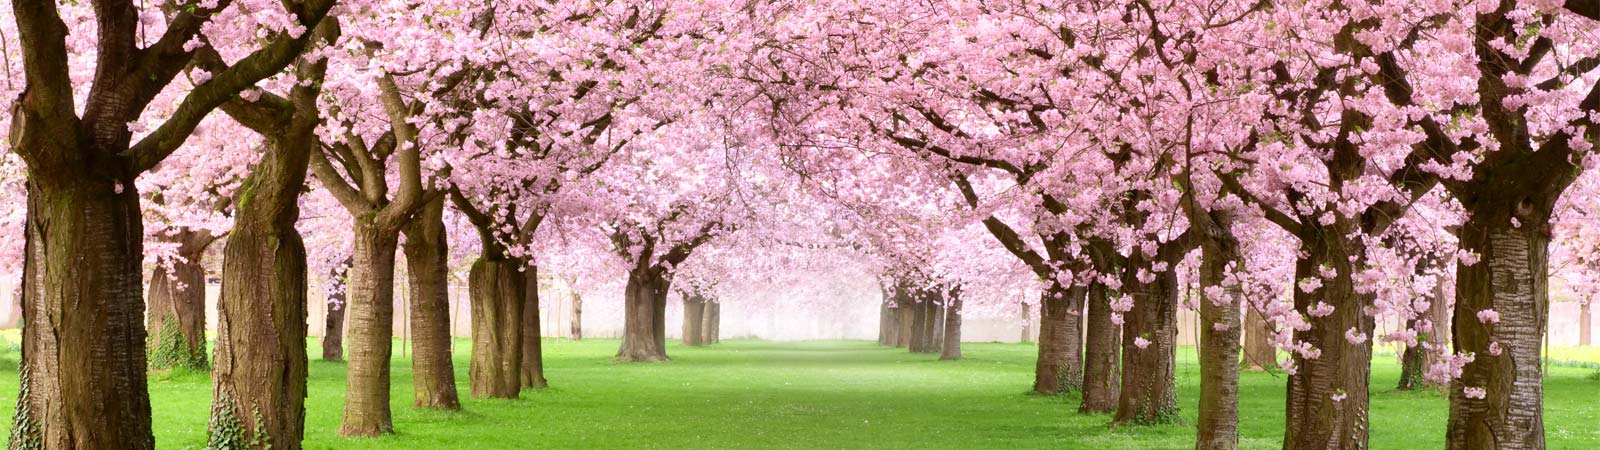 garden trees pink